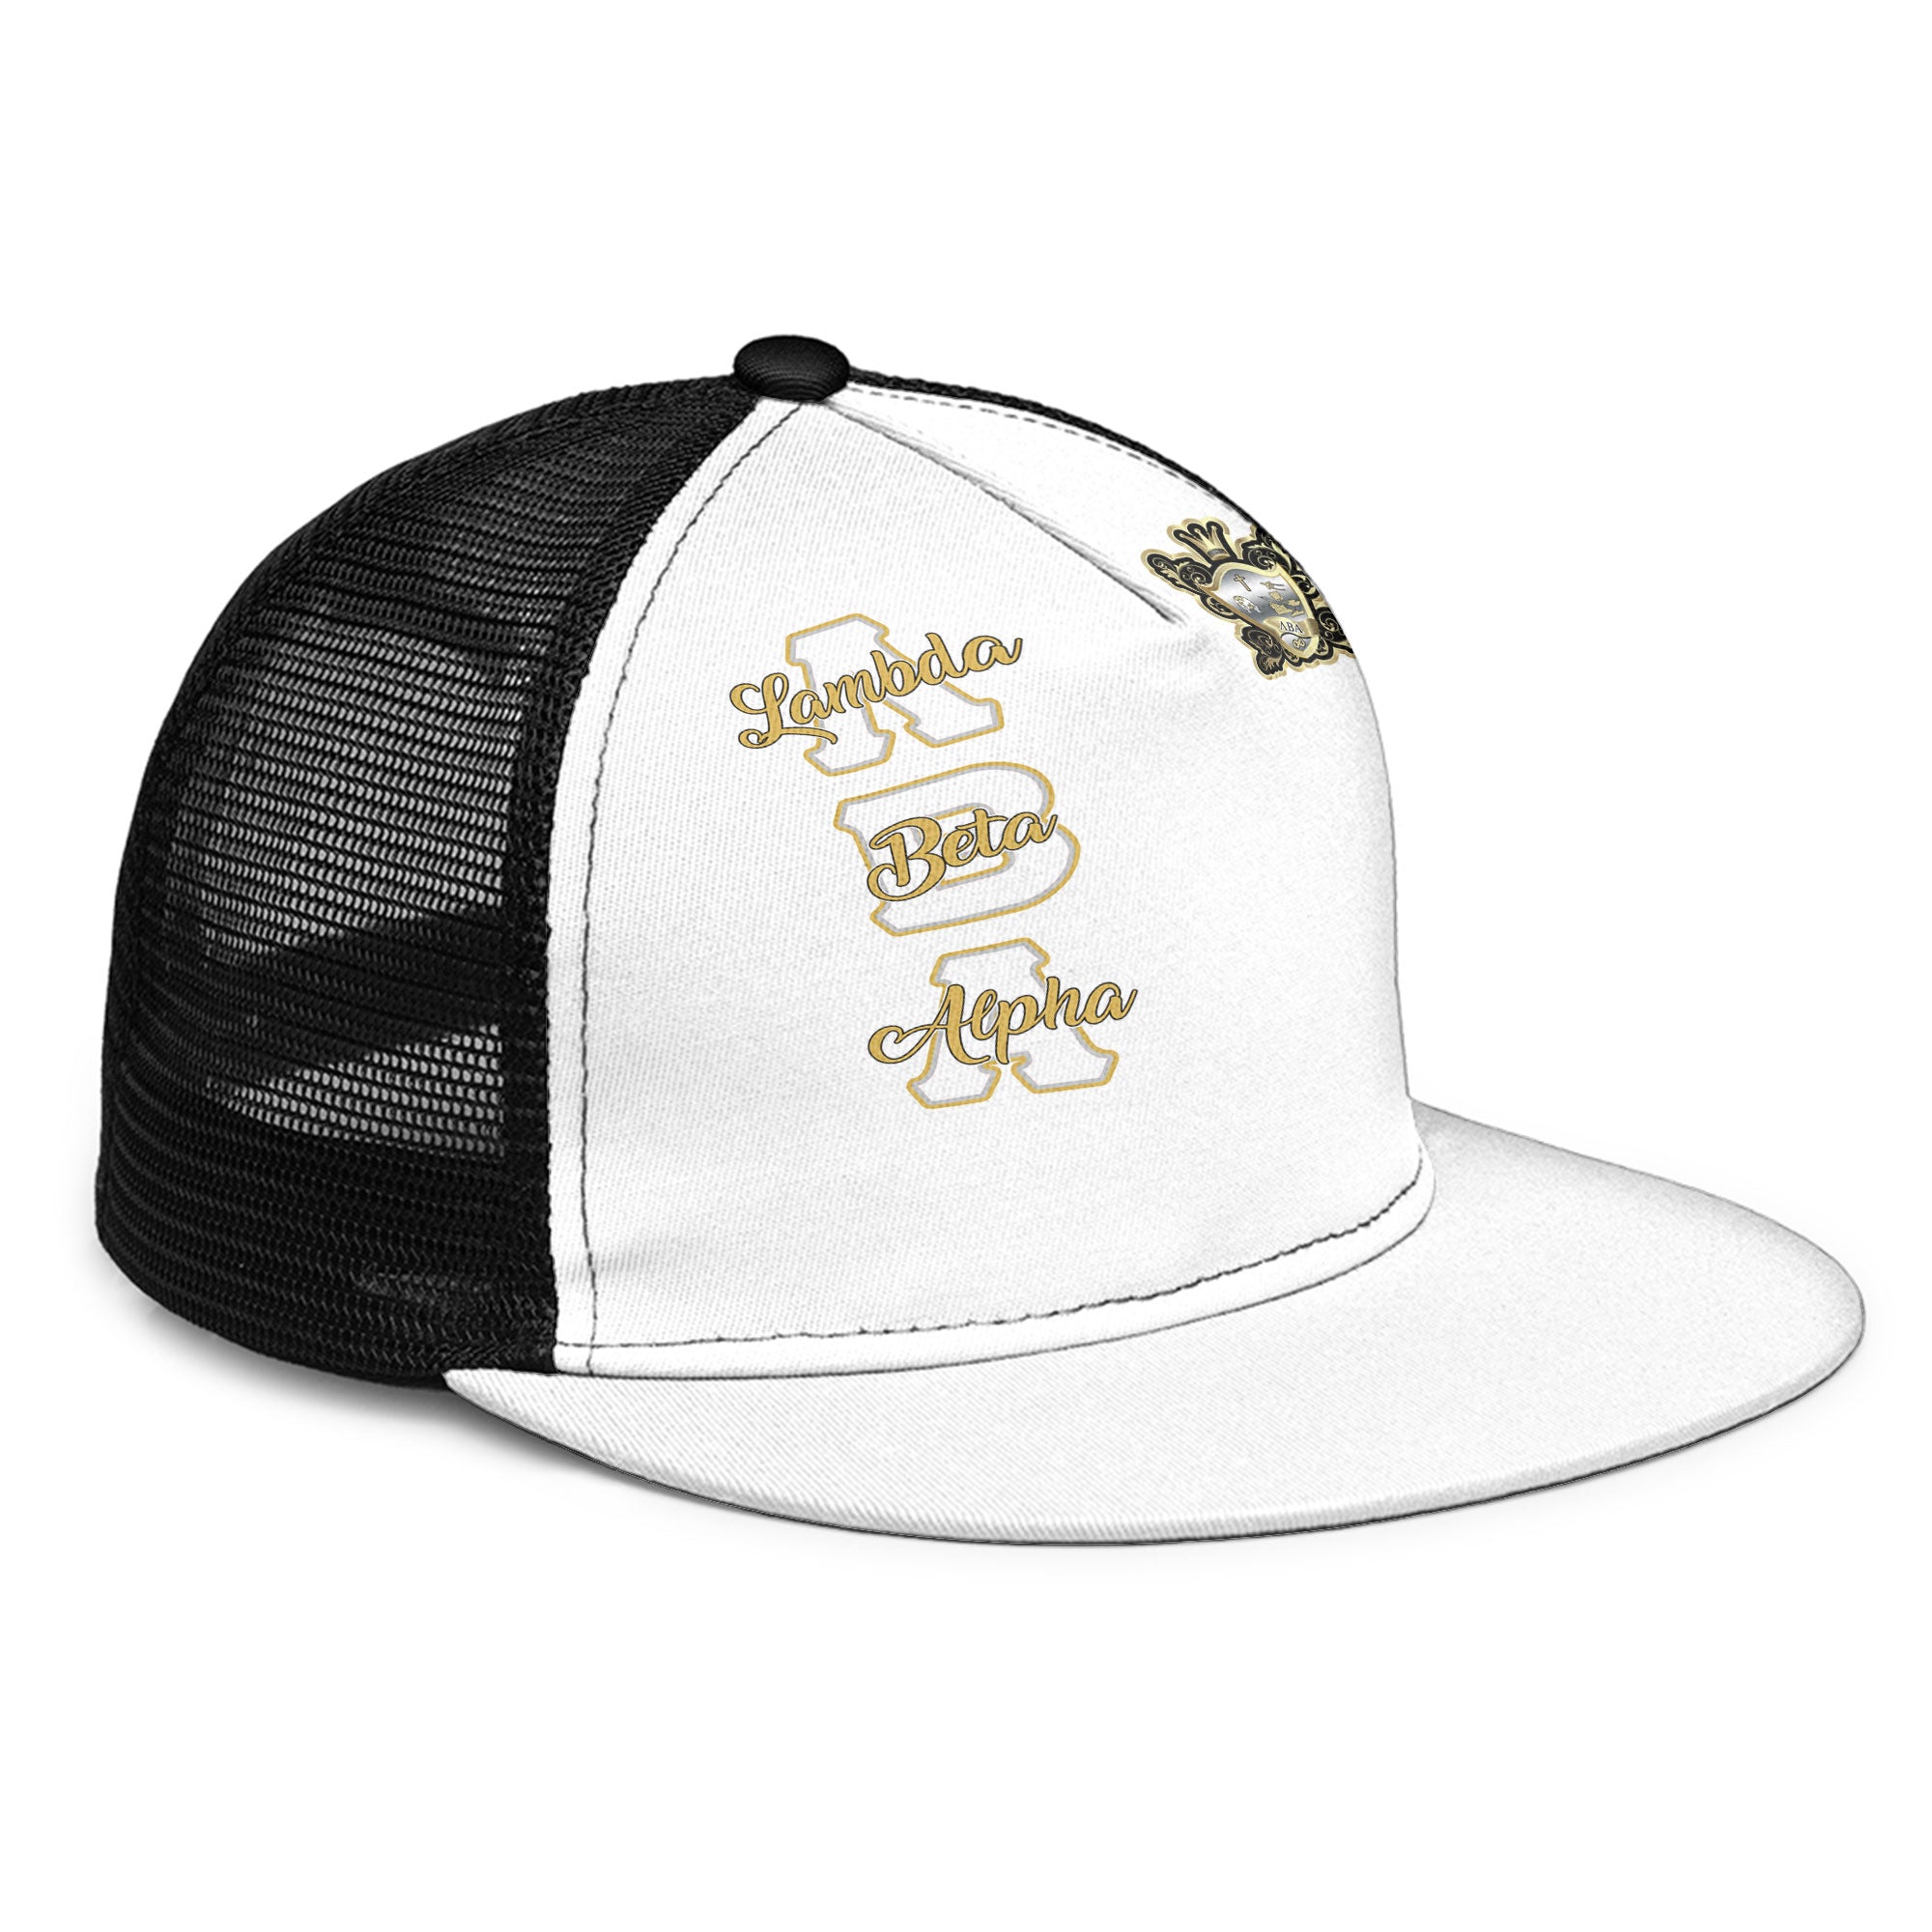 Sorority Trucker Hat - Lambda Beta Alpha Trucker Hat Original White Style